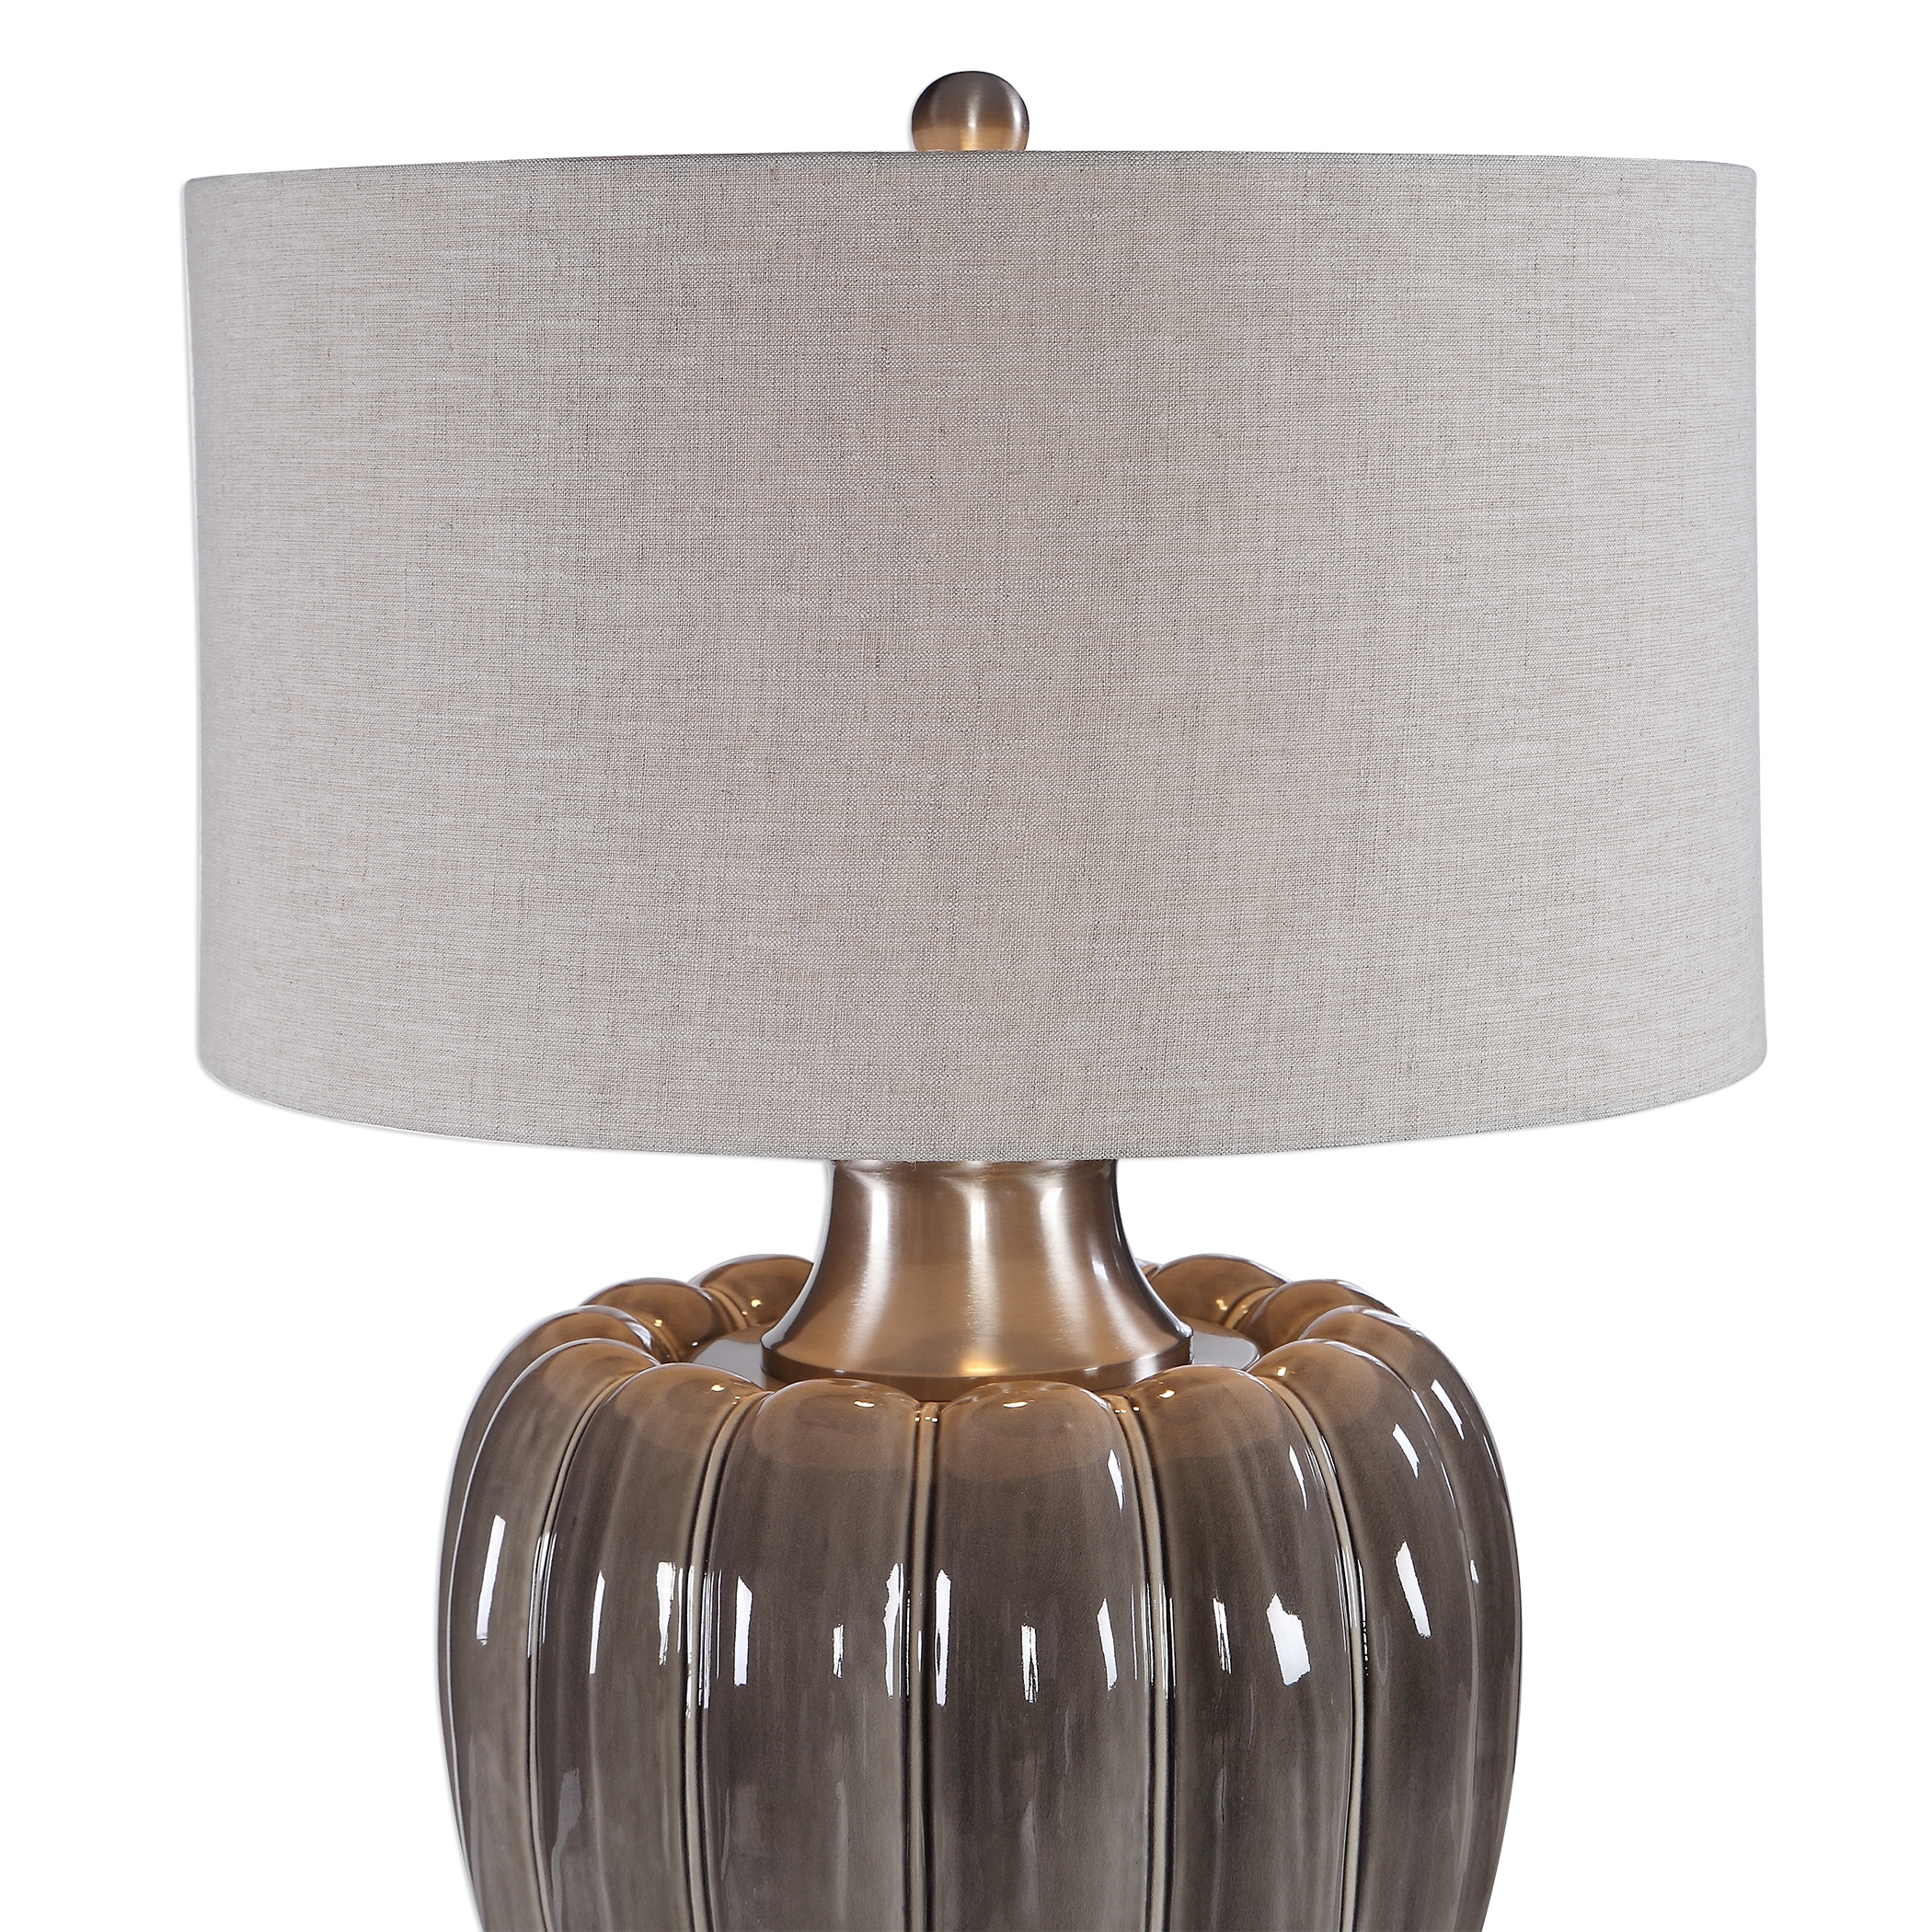 Adler Smoky Gray Table Lamp - Image 2